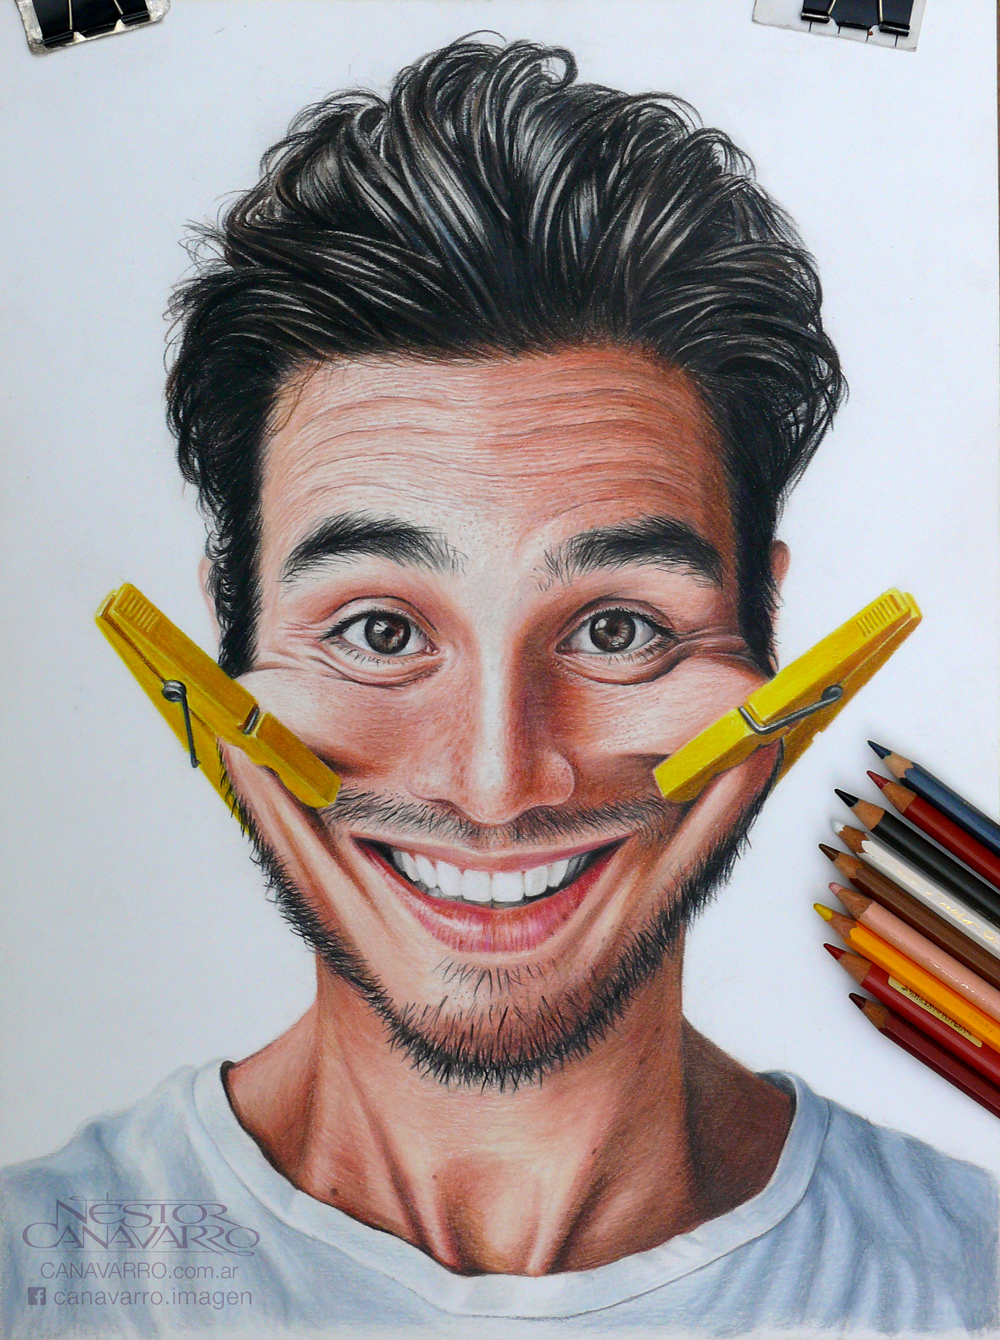 Colored Pencils Portraits on Behance